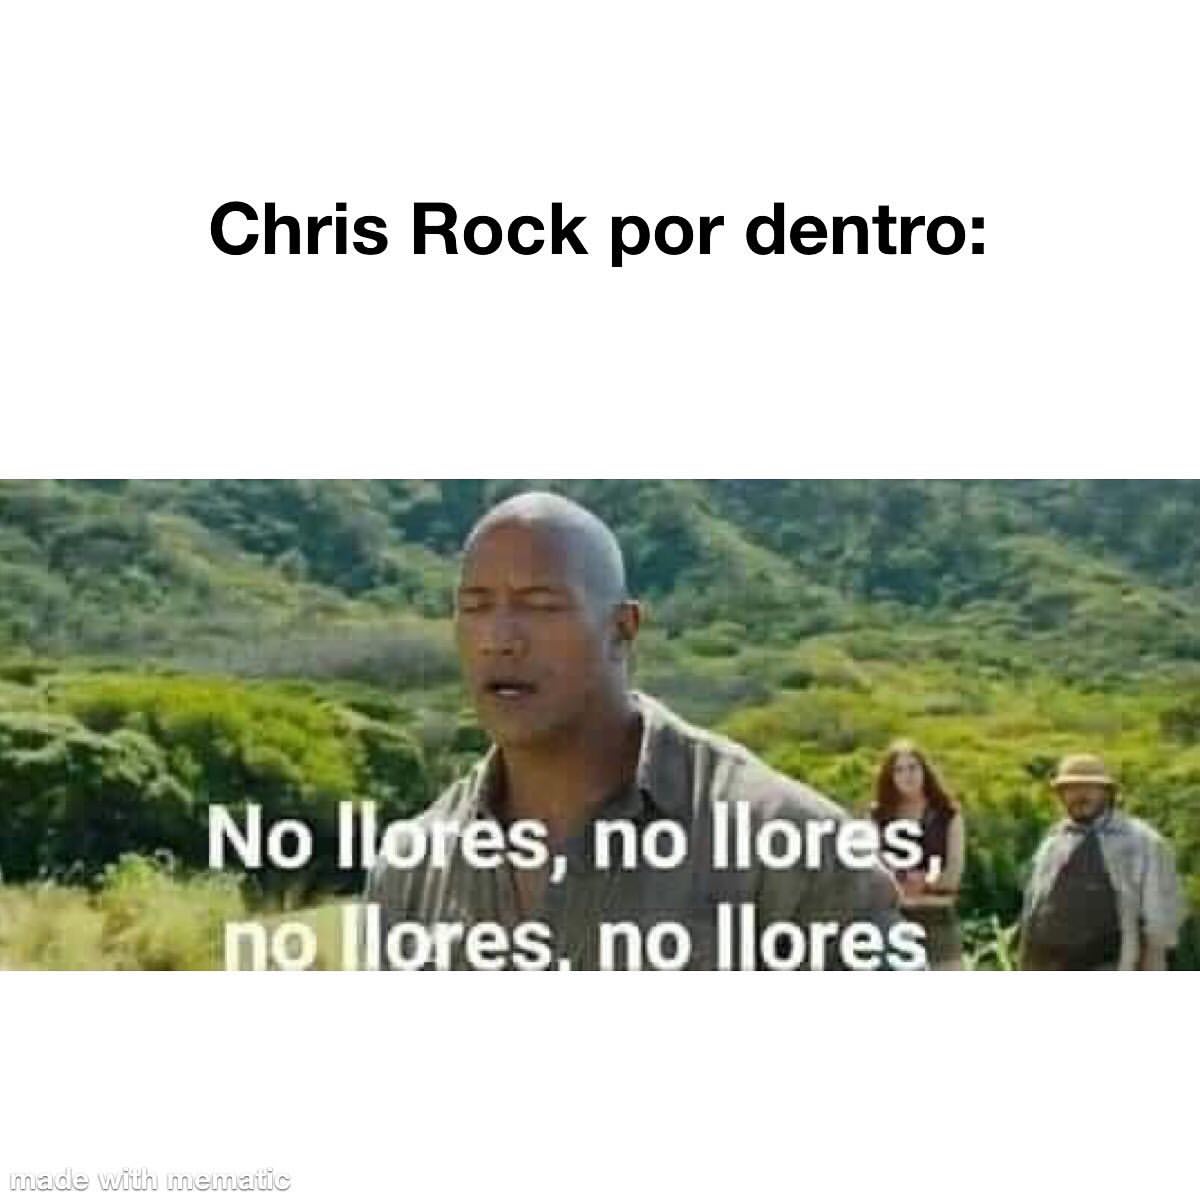 Chris Rock por dentro: No llores, no llores, no llores, no llores.